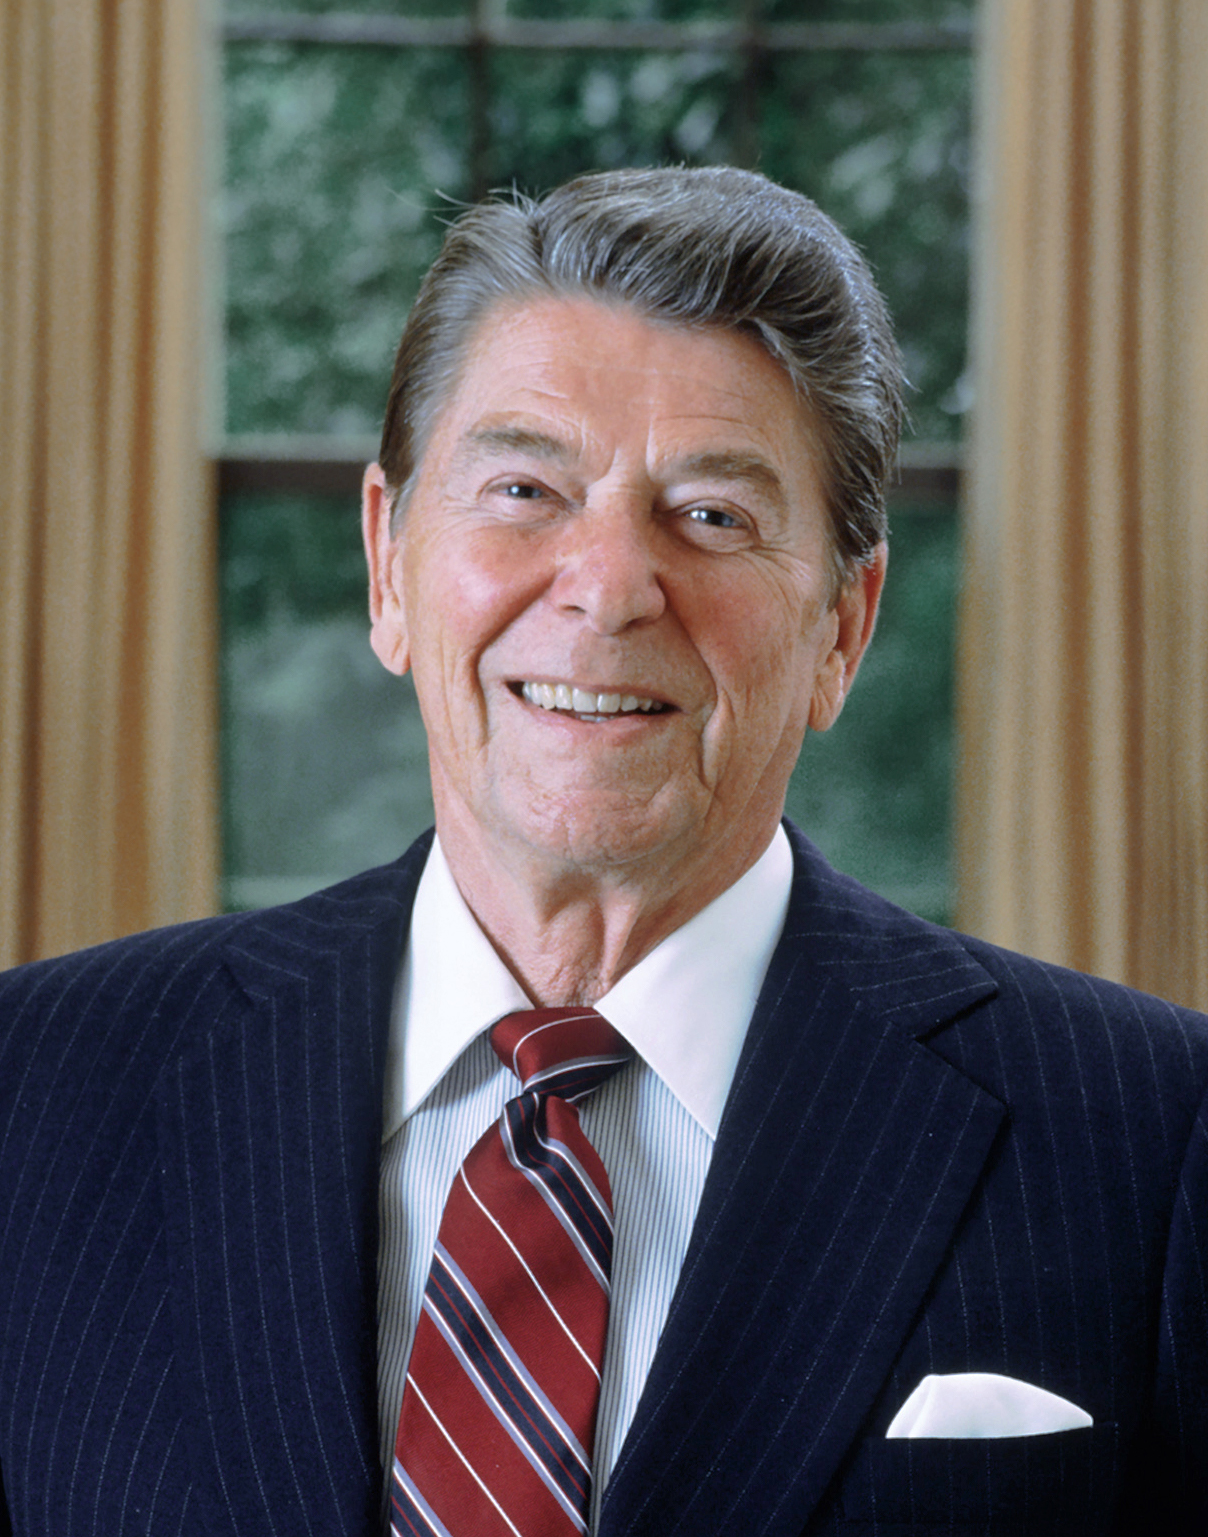 Ronald_Reagan_1985_presidential_portrait_%28cropped%29.jpg